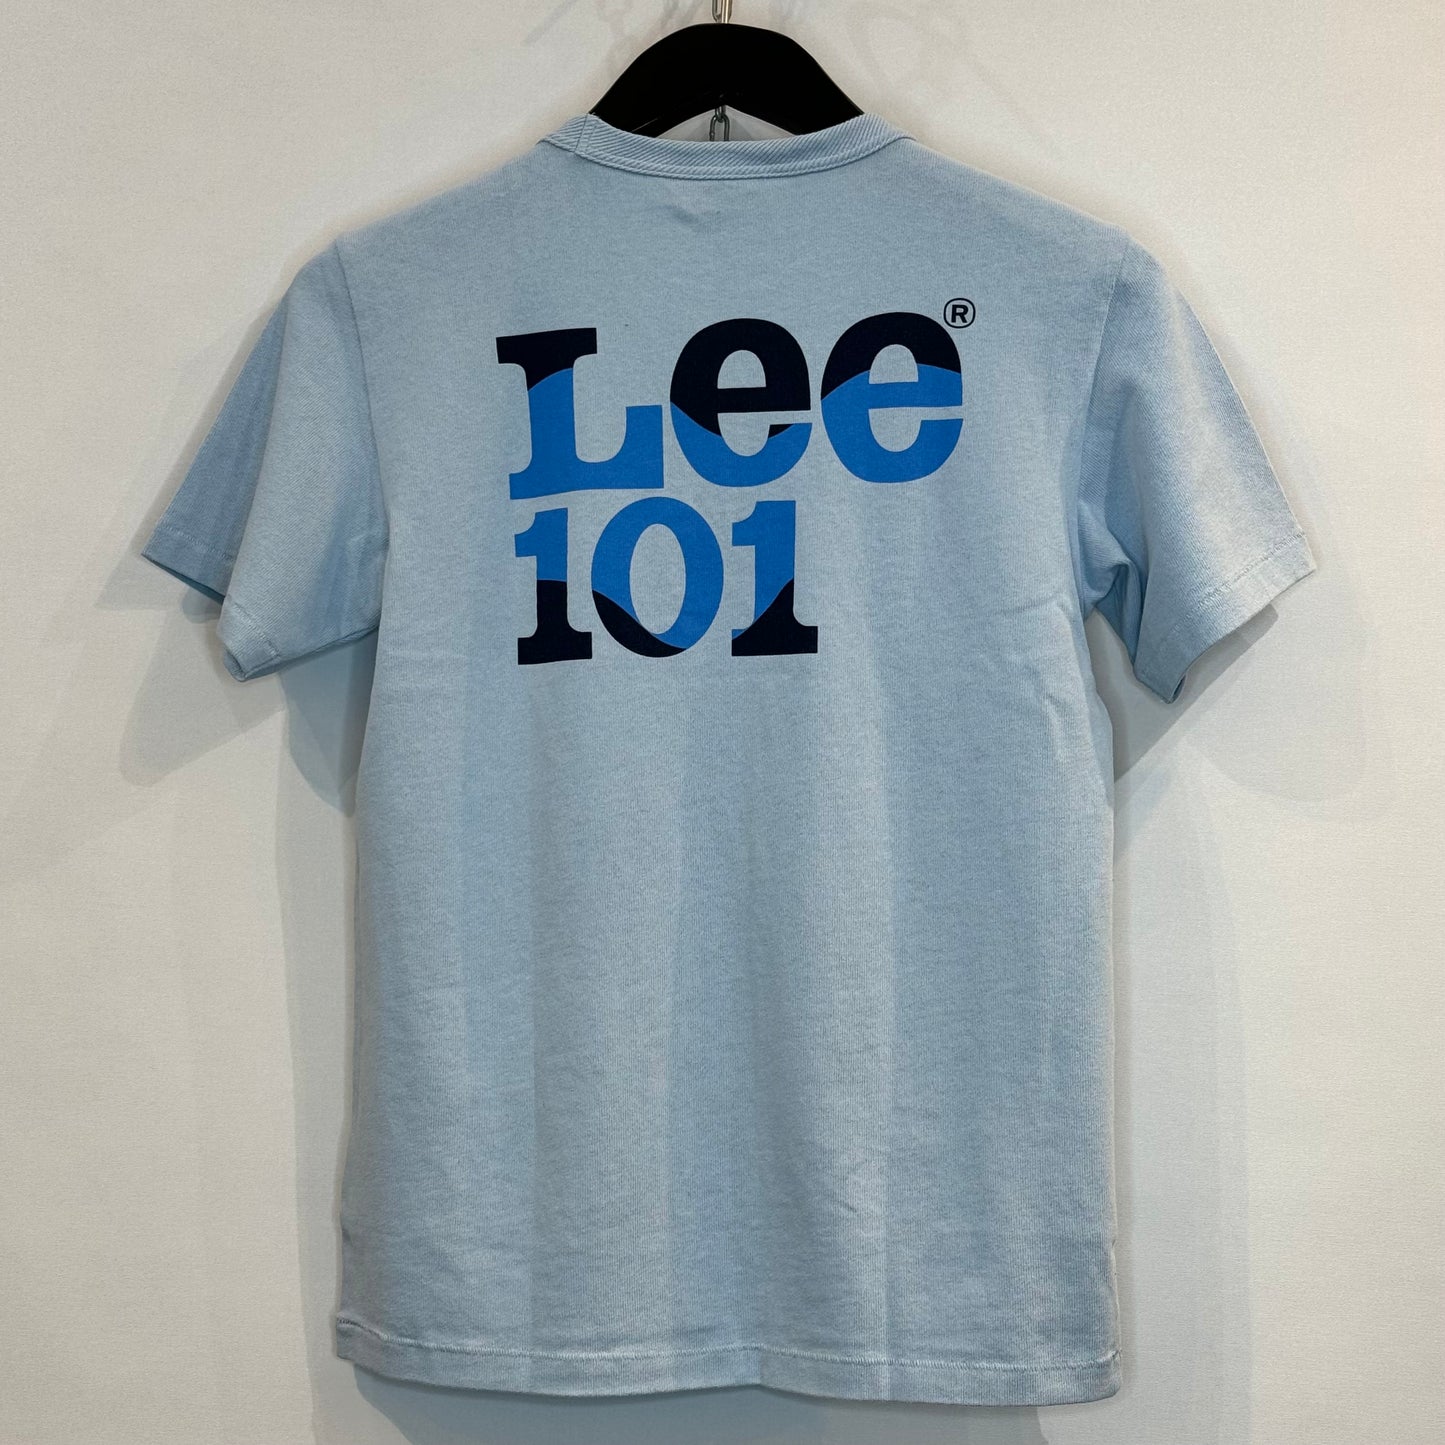 Lee 101 - Tee Sky Blue Back Print